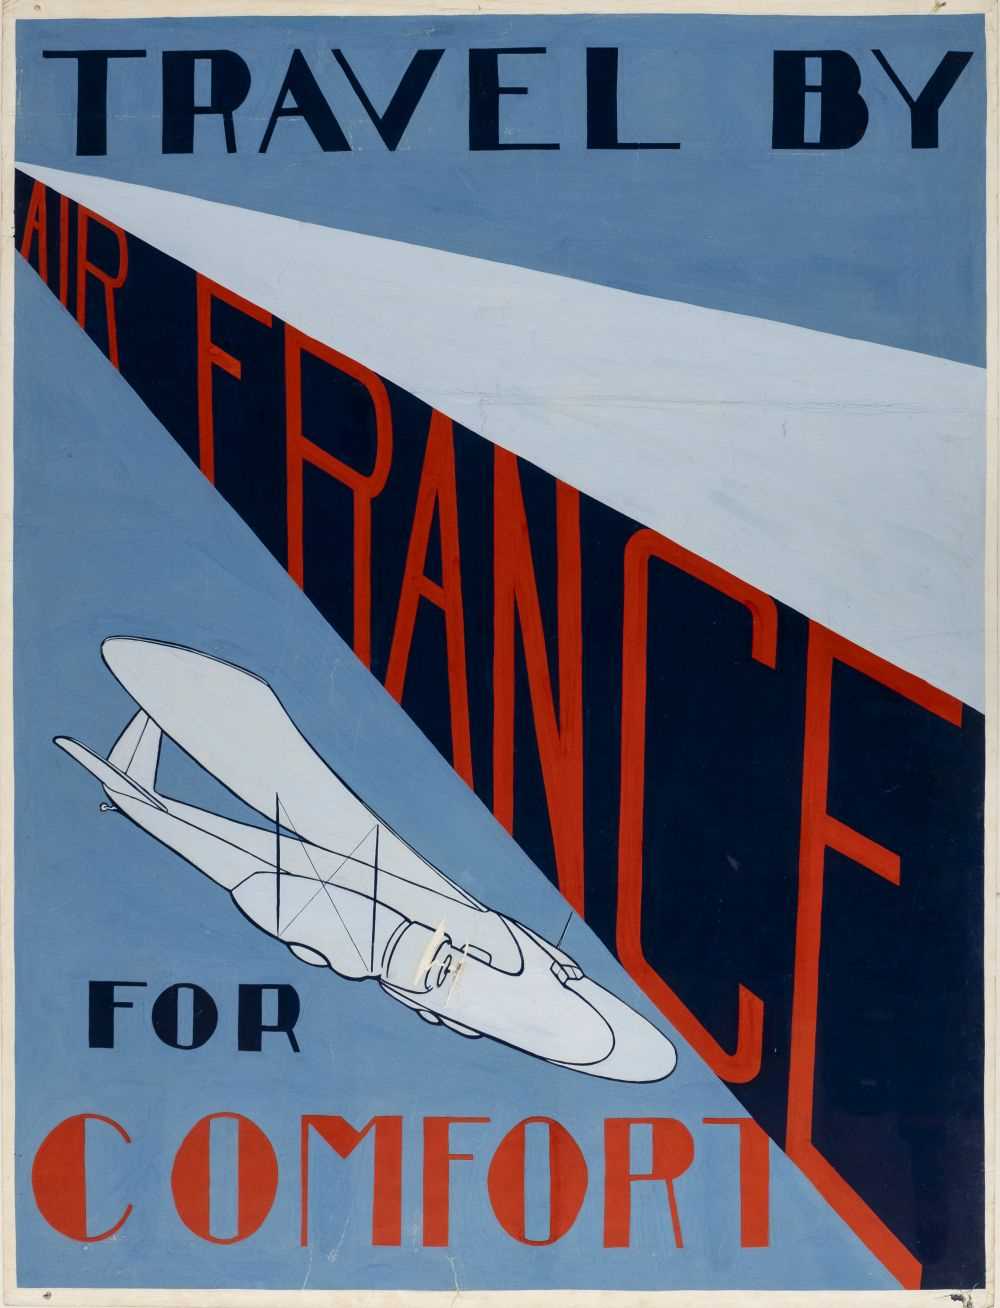 Lot 40 - Air France ‘Travel for Comfort’. Original poster artwork, c. 1930s